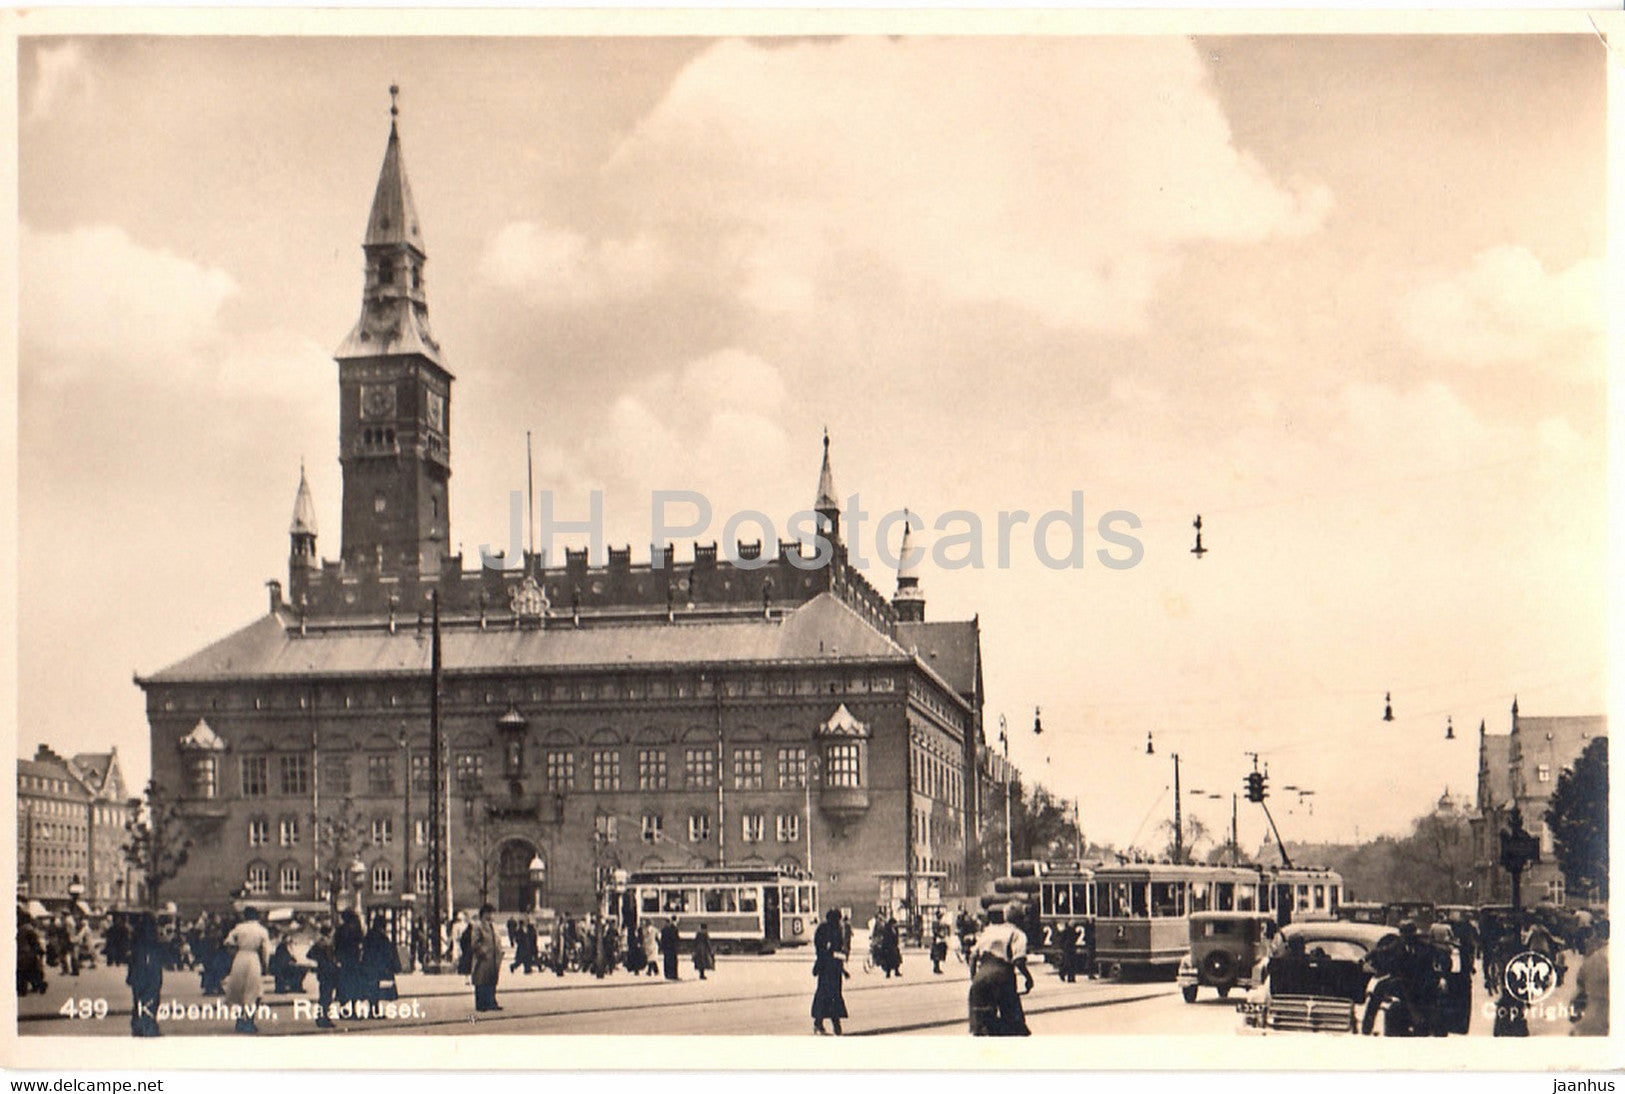 Copenhagen - Kobenhavn - Raadhuset - Town Hall - tram - 439 - old postcard - Denmark - unused - JH Postcards